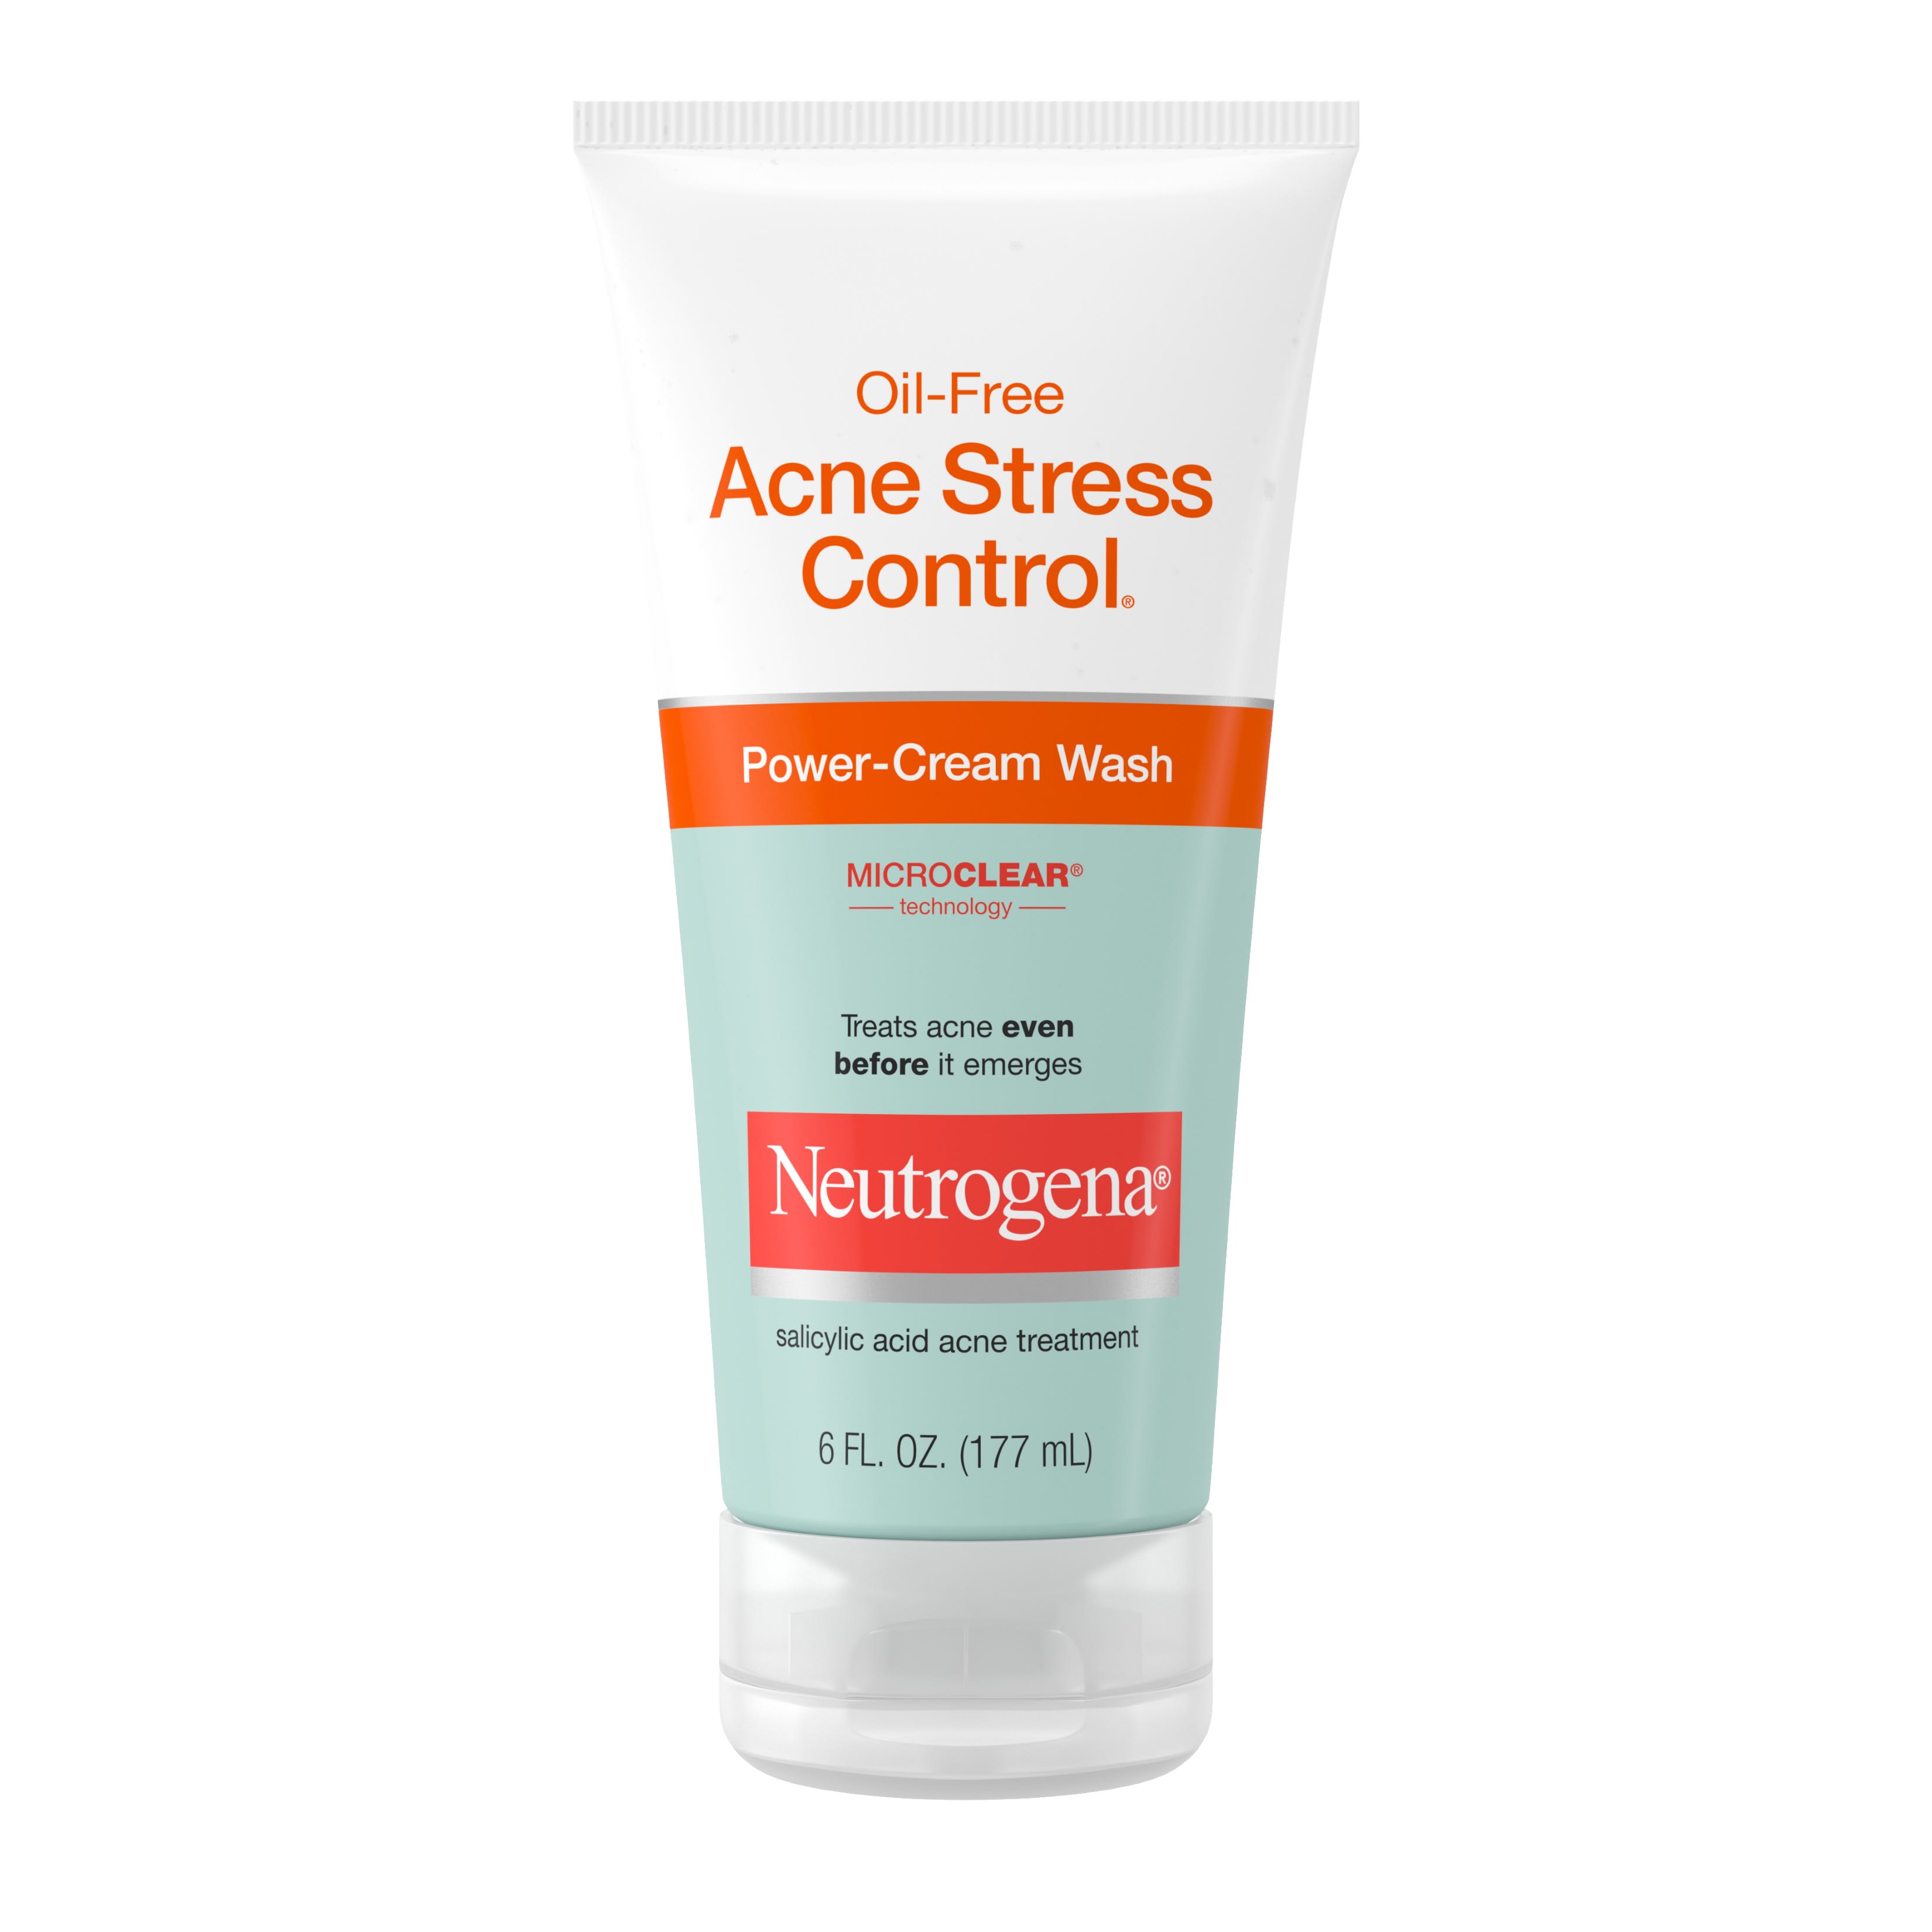 Neutrogena Oil-Free Acne Stress Control Power-Cream Face Wash 6 fl. oz | MTTS284